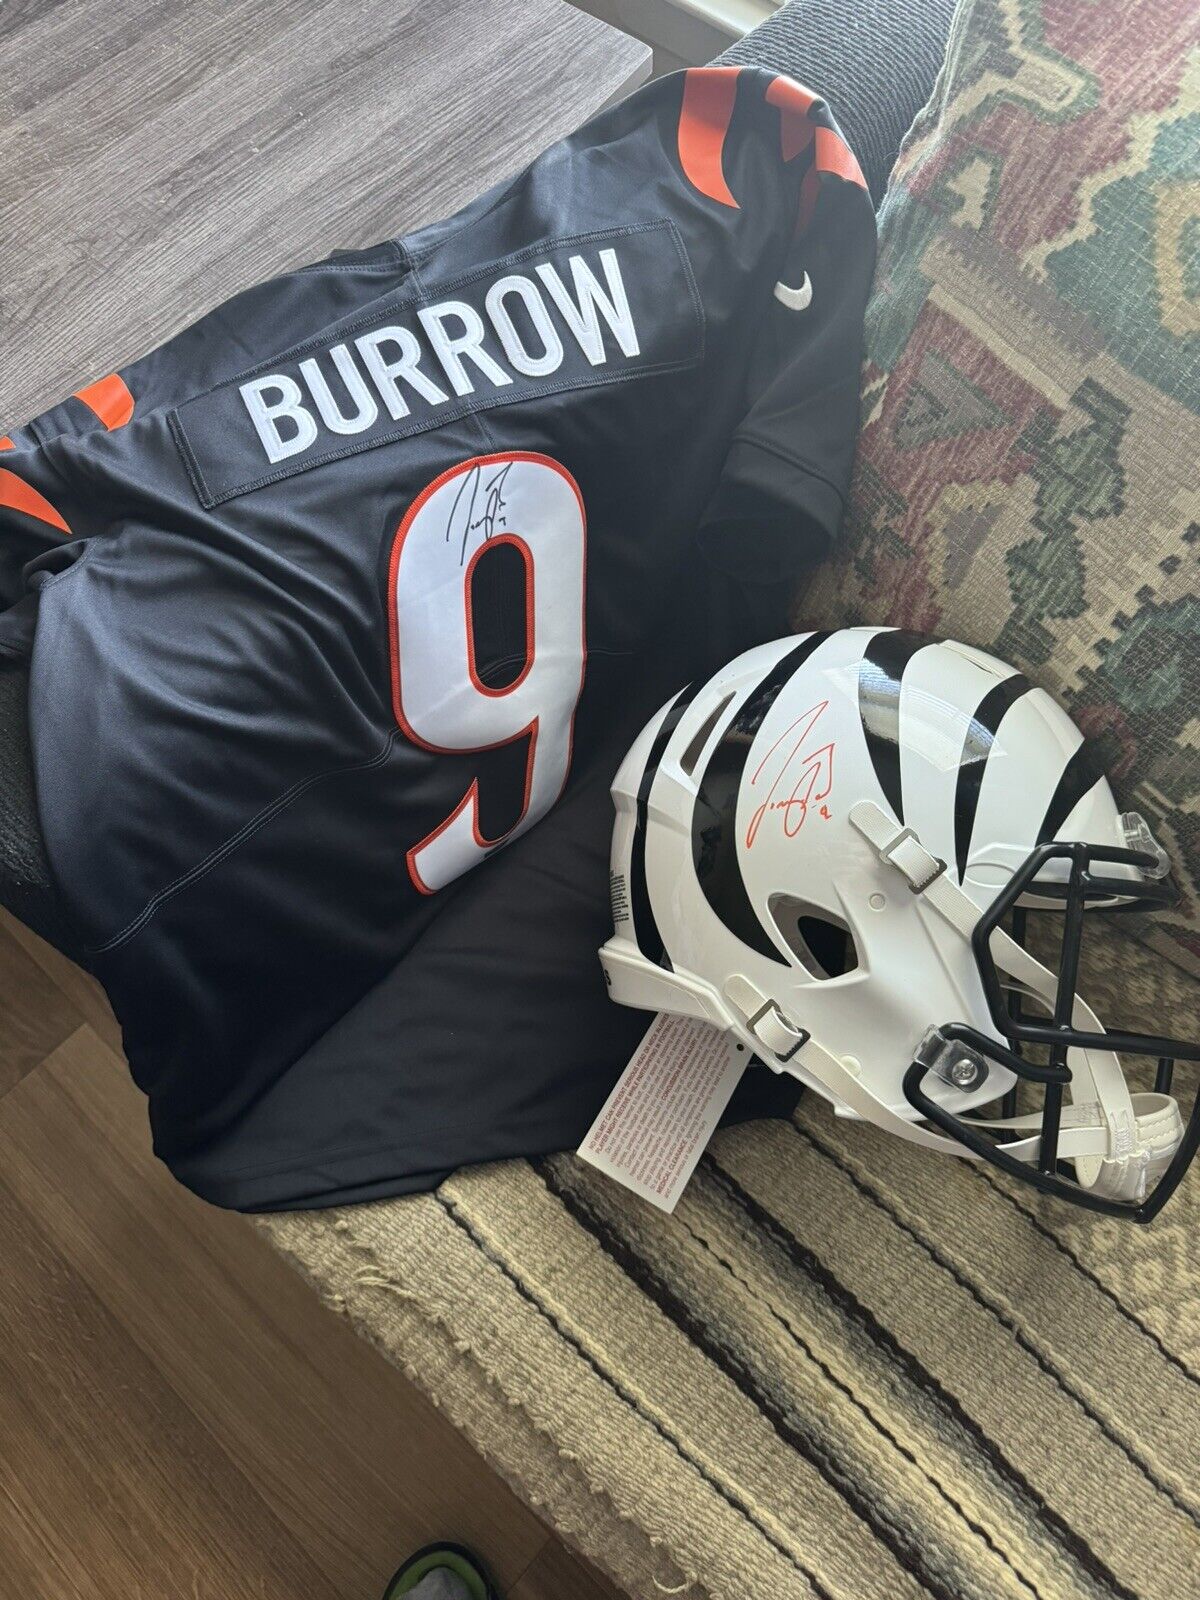 Joe Burrow Signed Authentic Helmet & Nike Jersey.Beckett Authenticated.